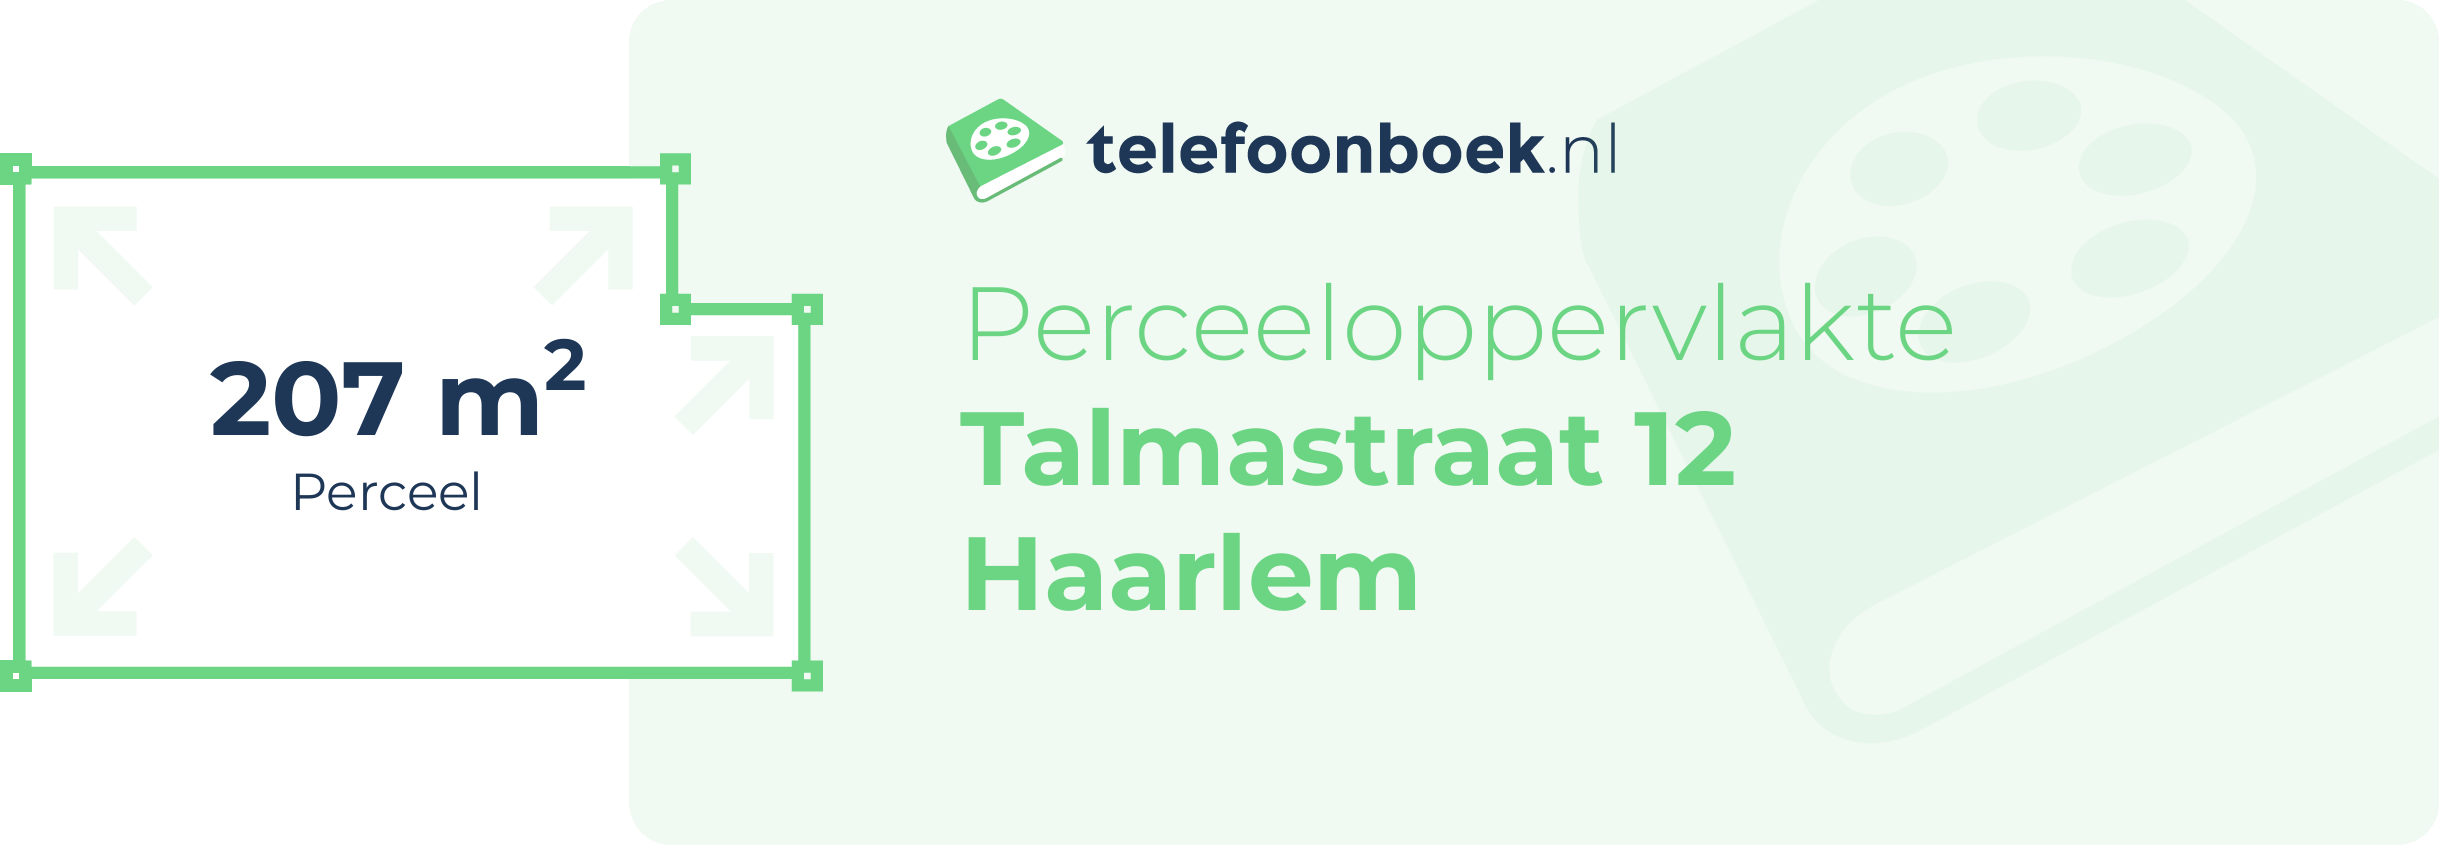 Perceeloppervlakte Talmastraat 12 Haarlem